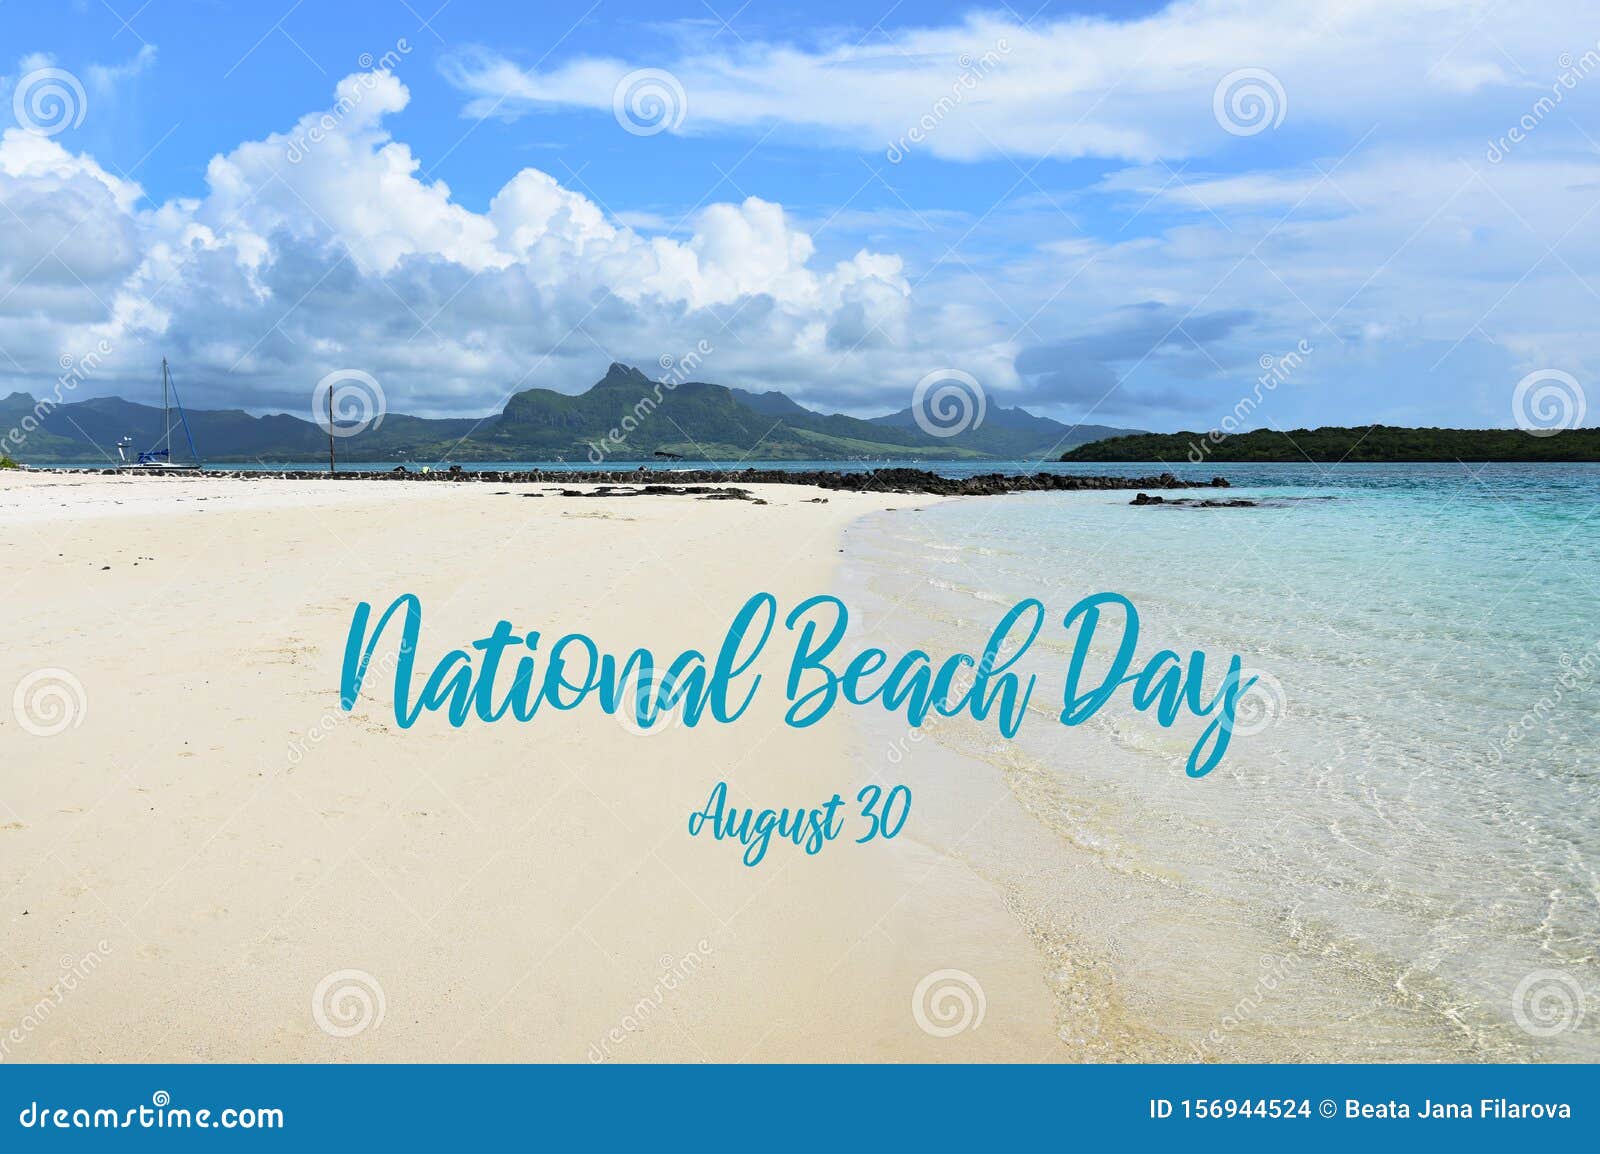 national-beach-day-156944524.jpg